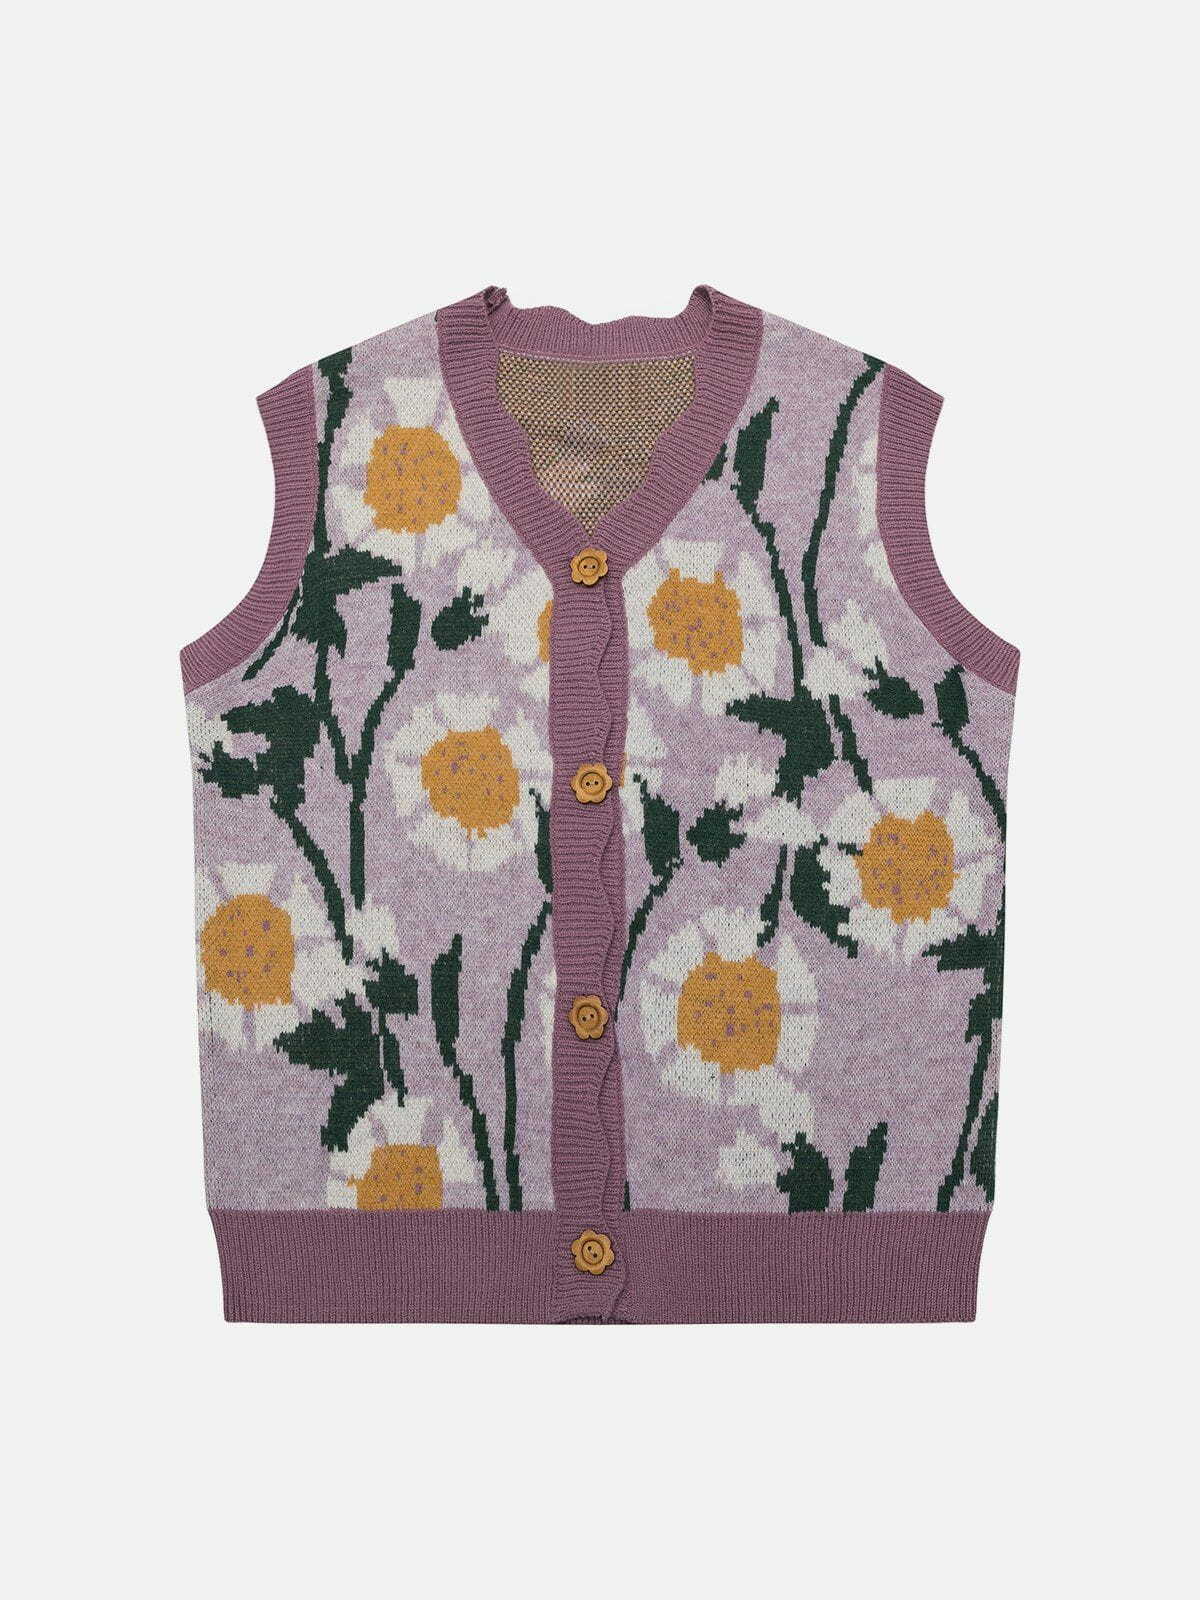 vintage sunflowers sweater vest retro chic y2k fashion essential 4441